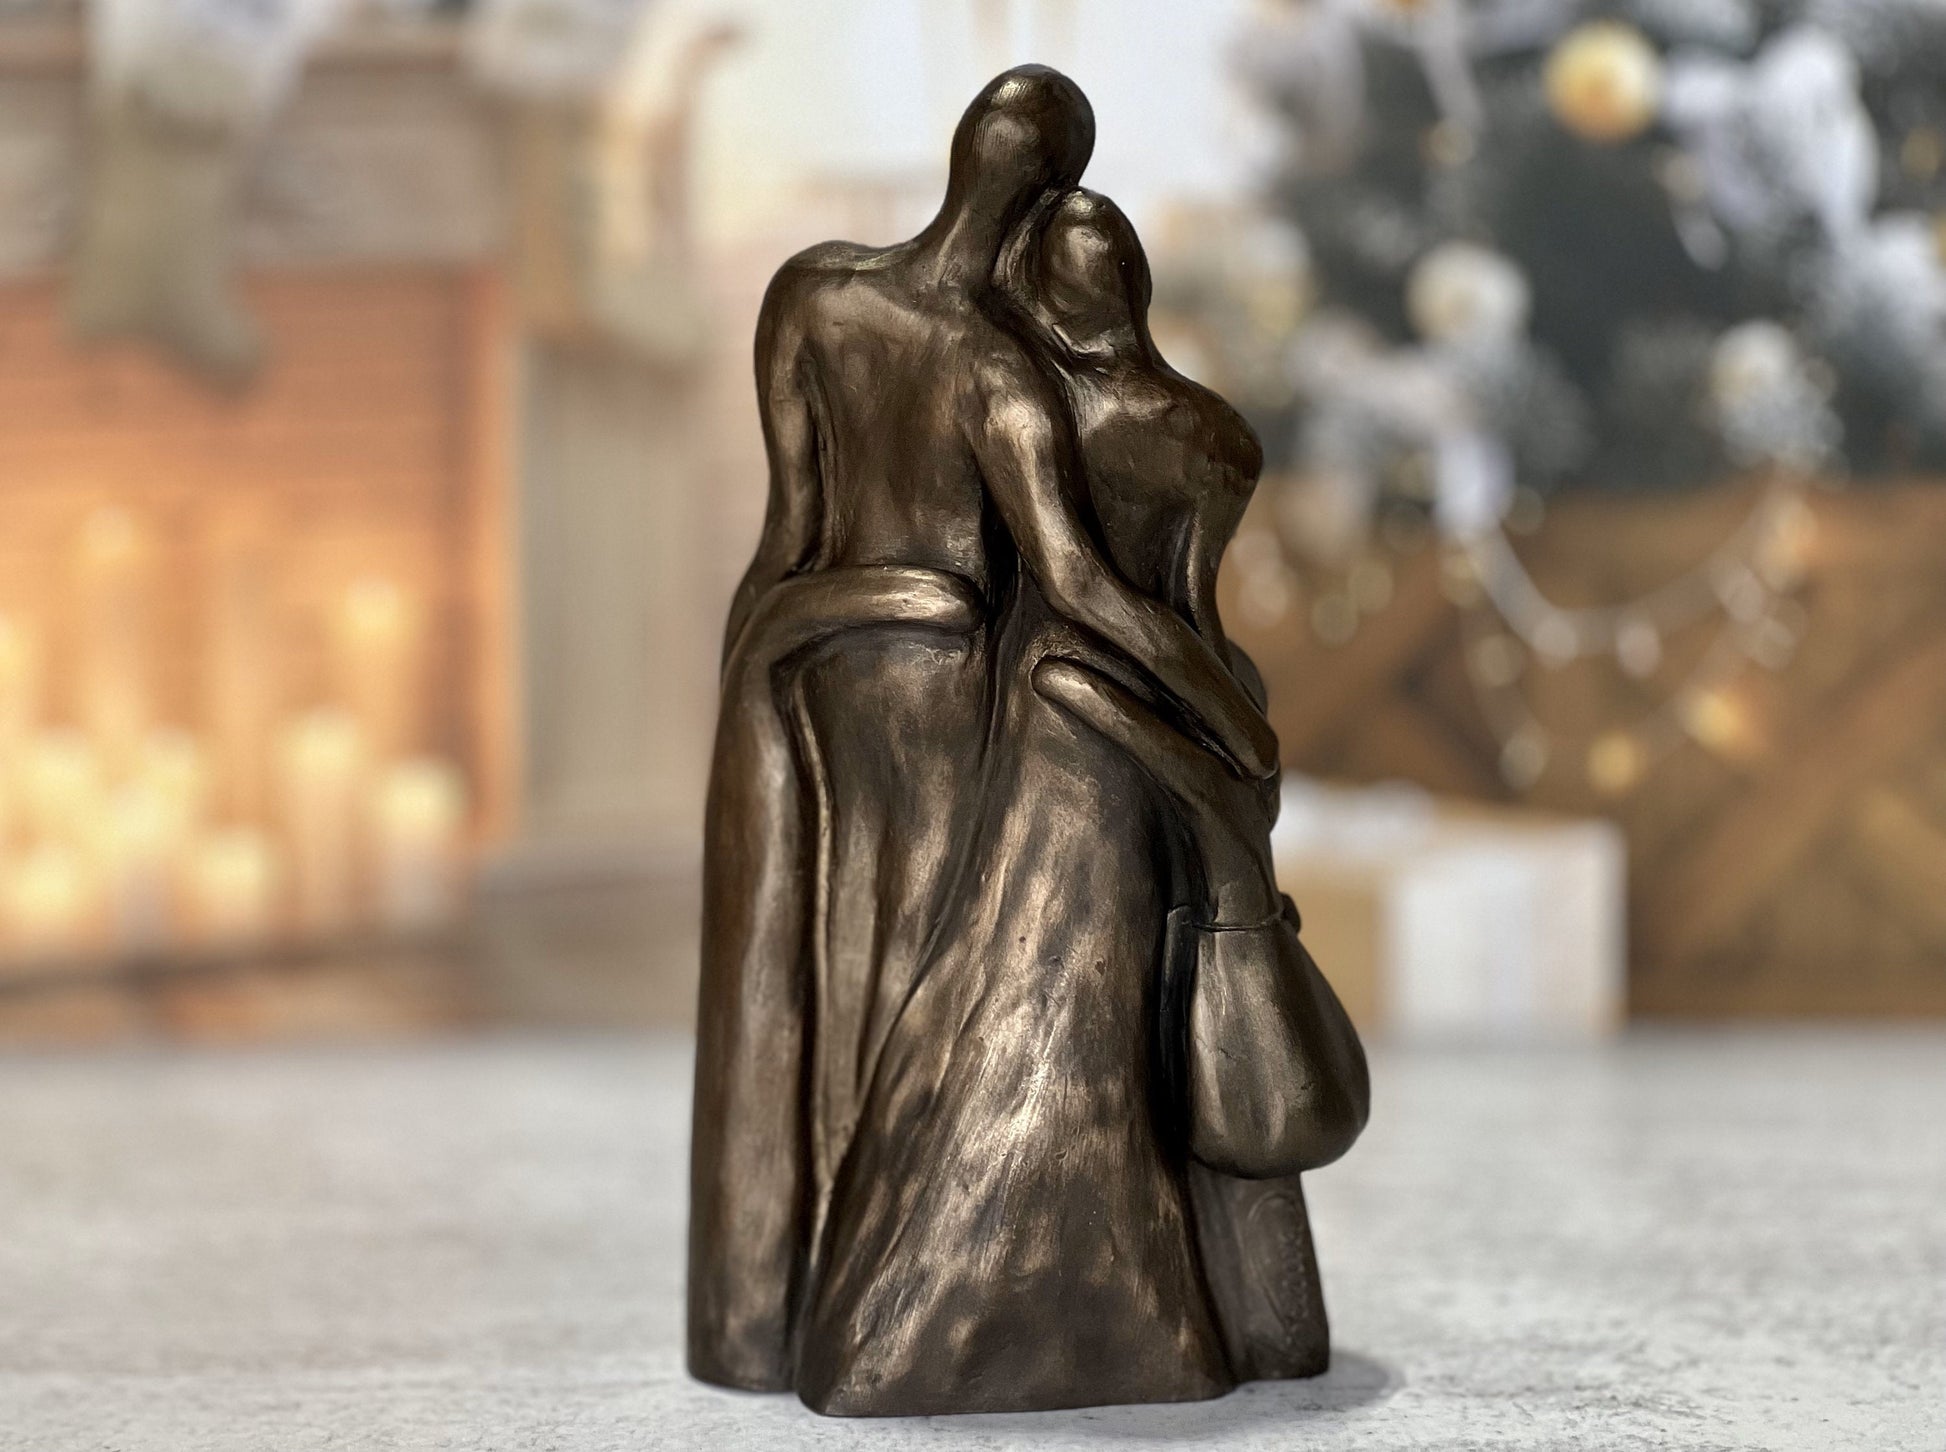 Family Hug Figurine Sculpture - Personalized Keepsake Christmas Gift for Mom Dad Husband Wife